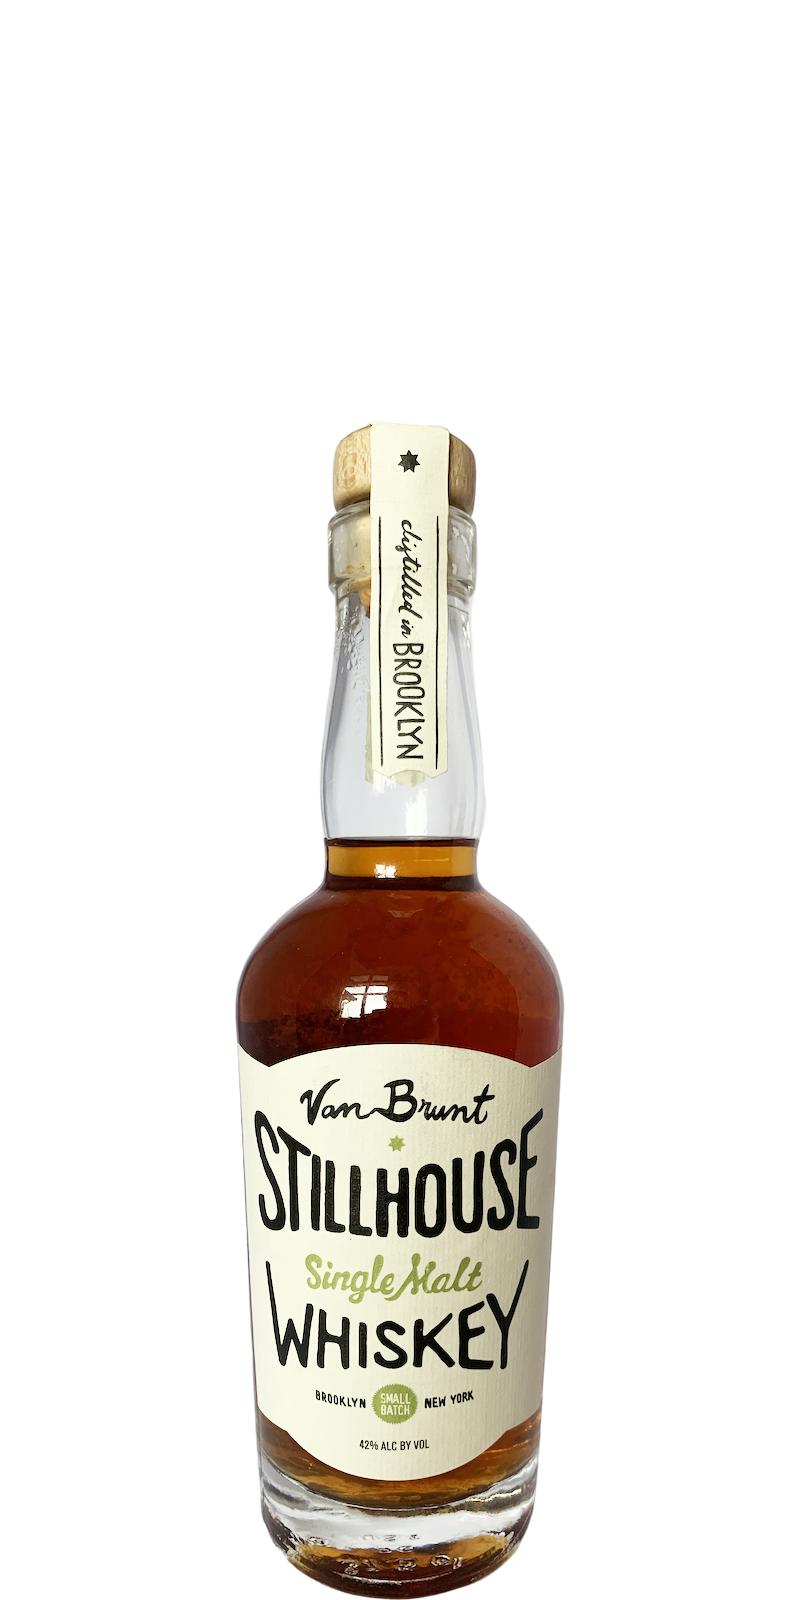 Van Brunt Stillhouse Single Malt Whisky New small American oak casks LOT 44 42% 375ml